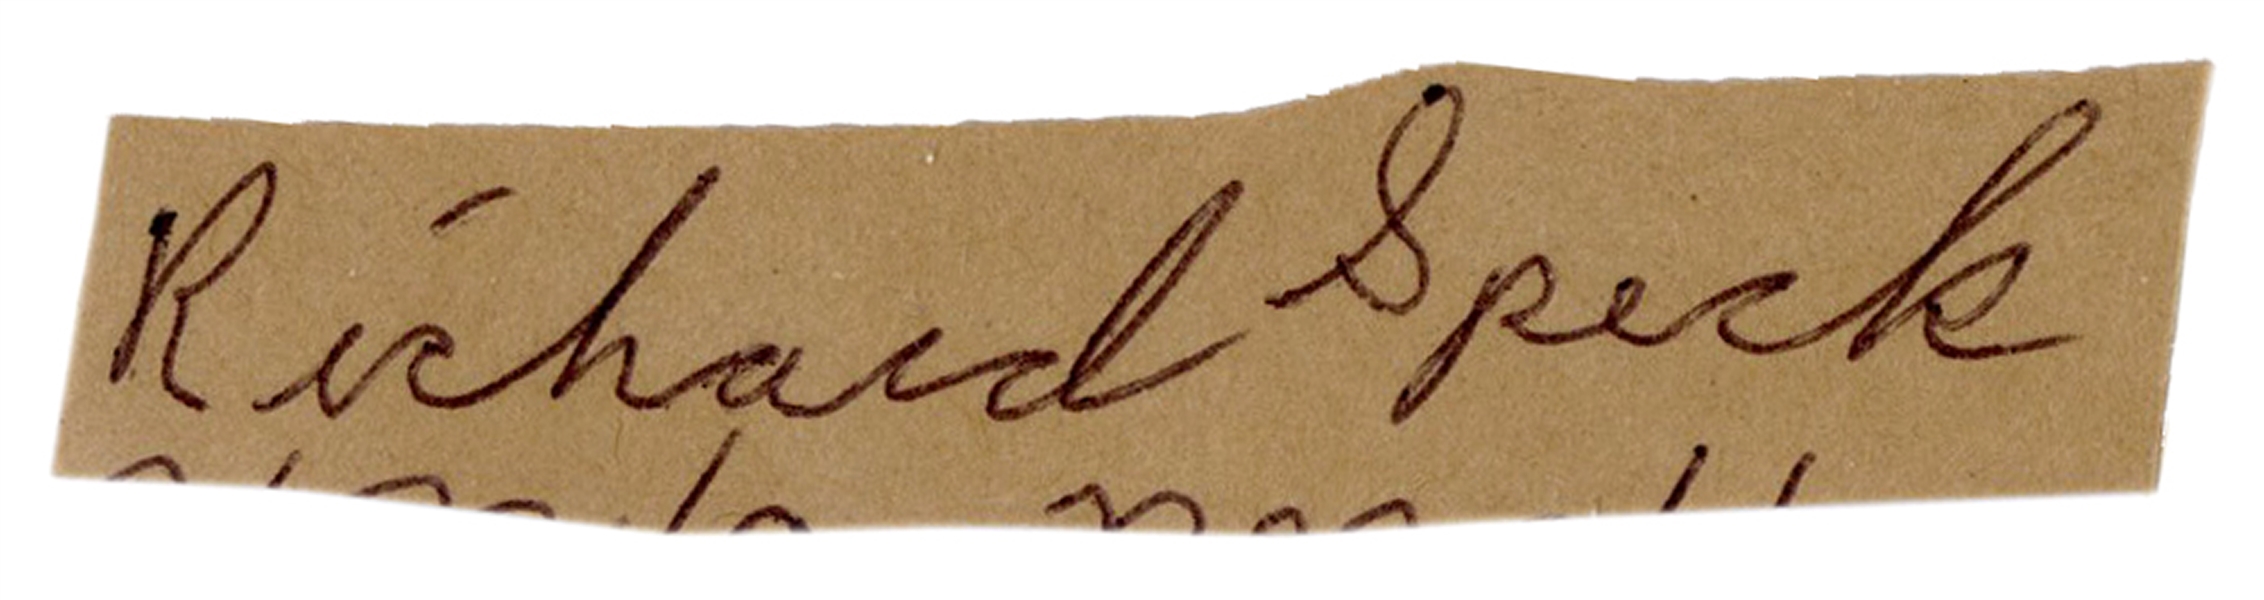 Cut Signature of Richard Speck.